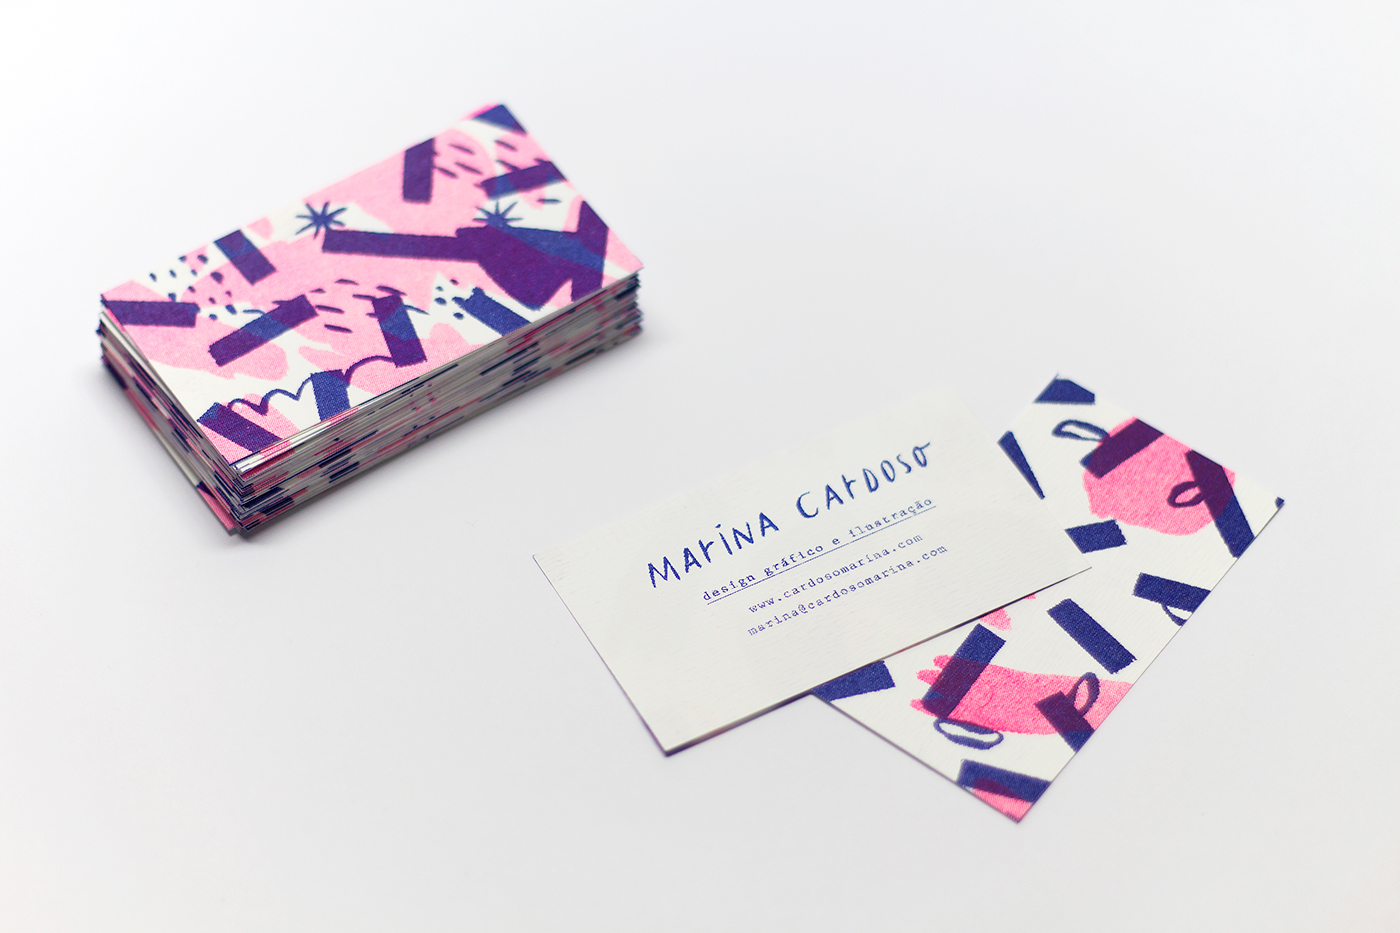 deviantart: Marina Cardoso - Personal Business Cards